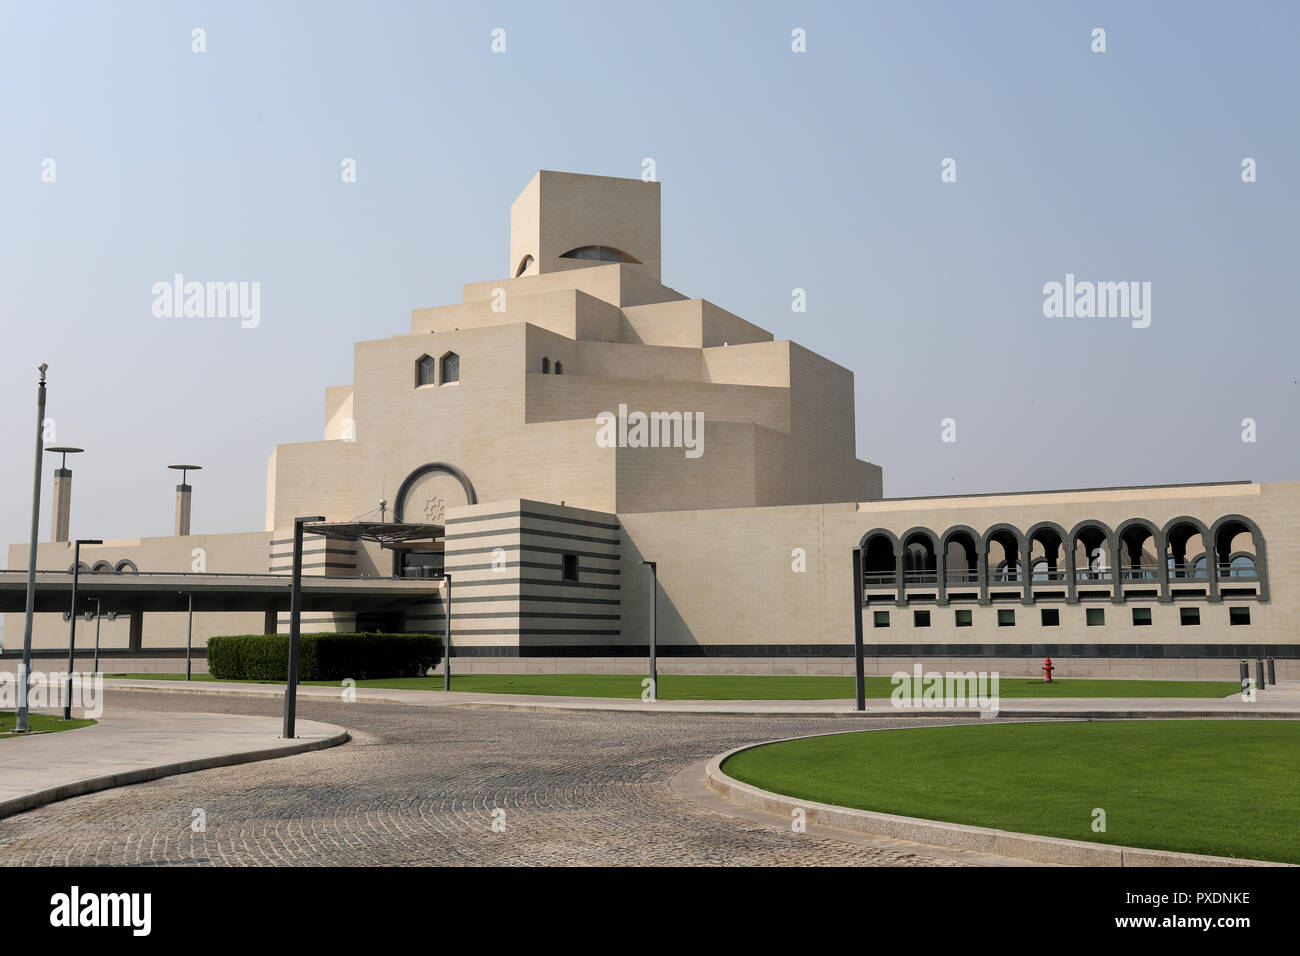 Doha / Qatar – October 10, 2018: The distinctive shape of the Museum of Islamic Art in Doha, Qatar, designed by architect I M Pei. Stock Photo